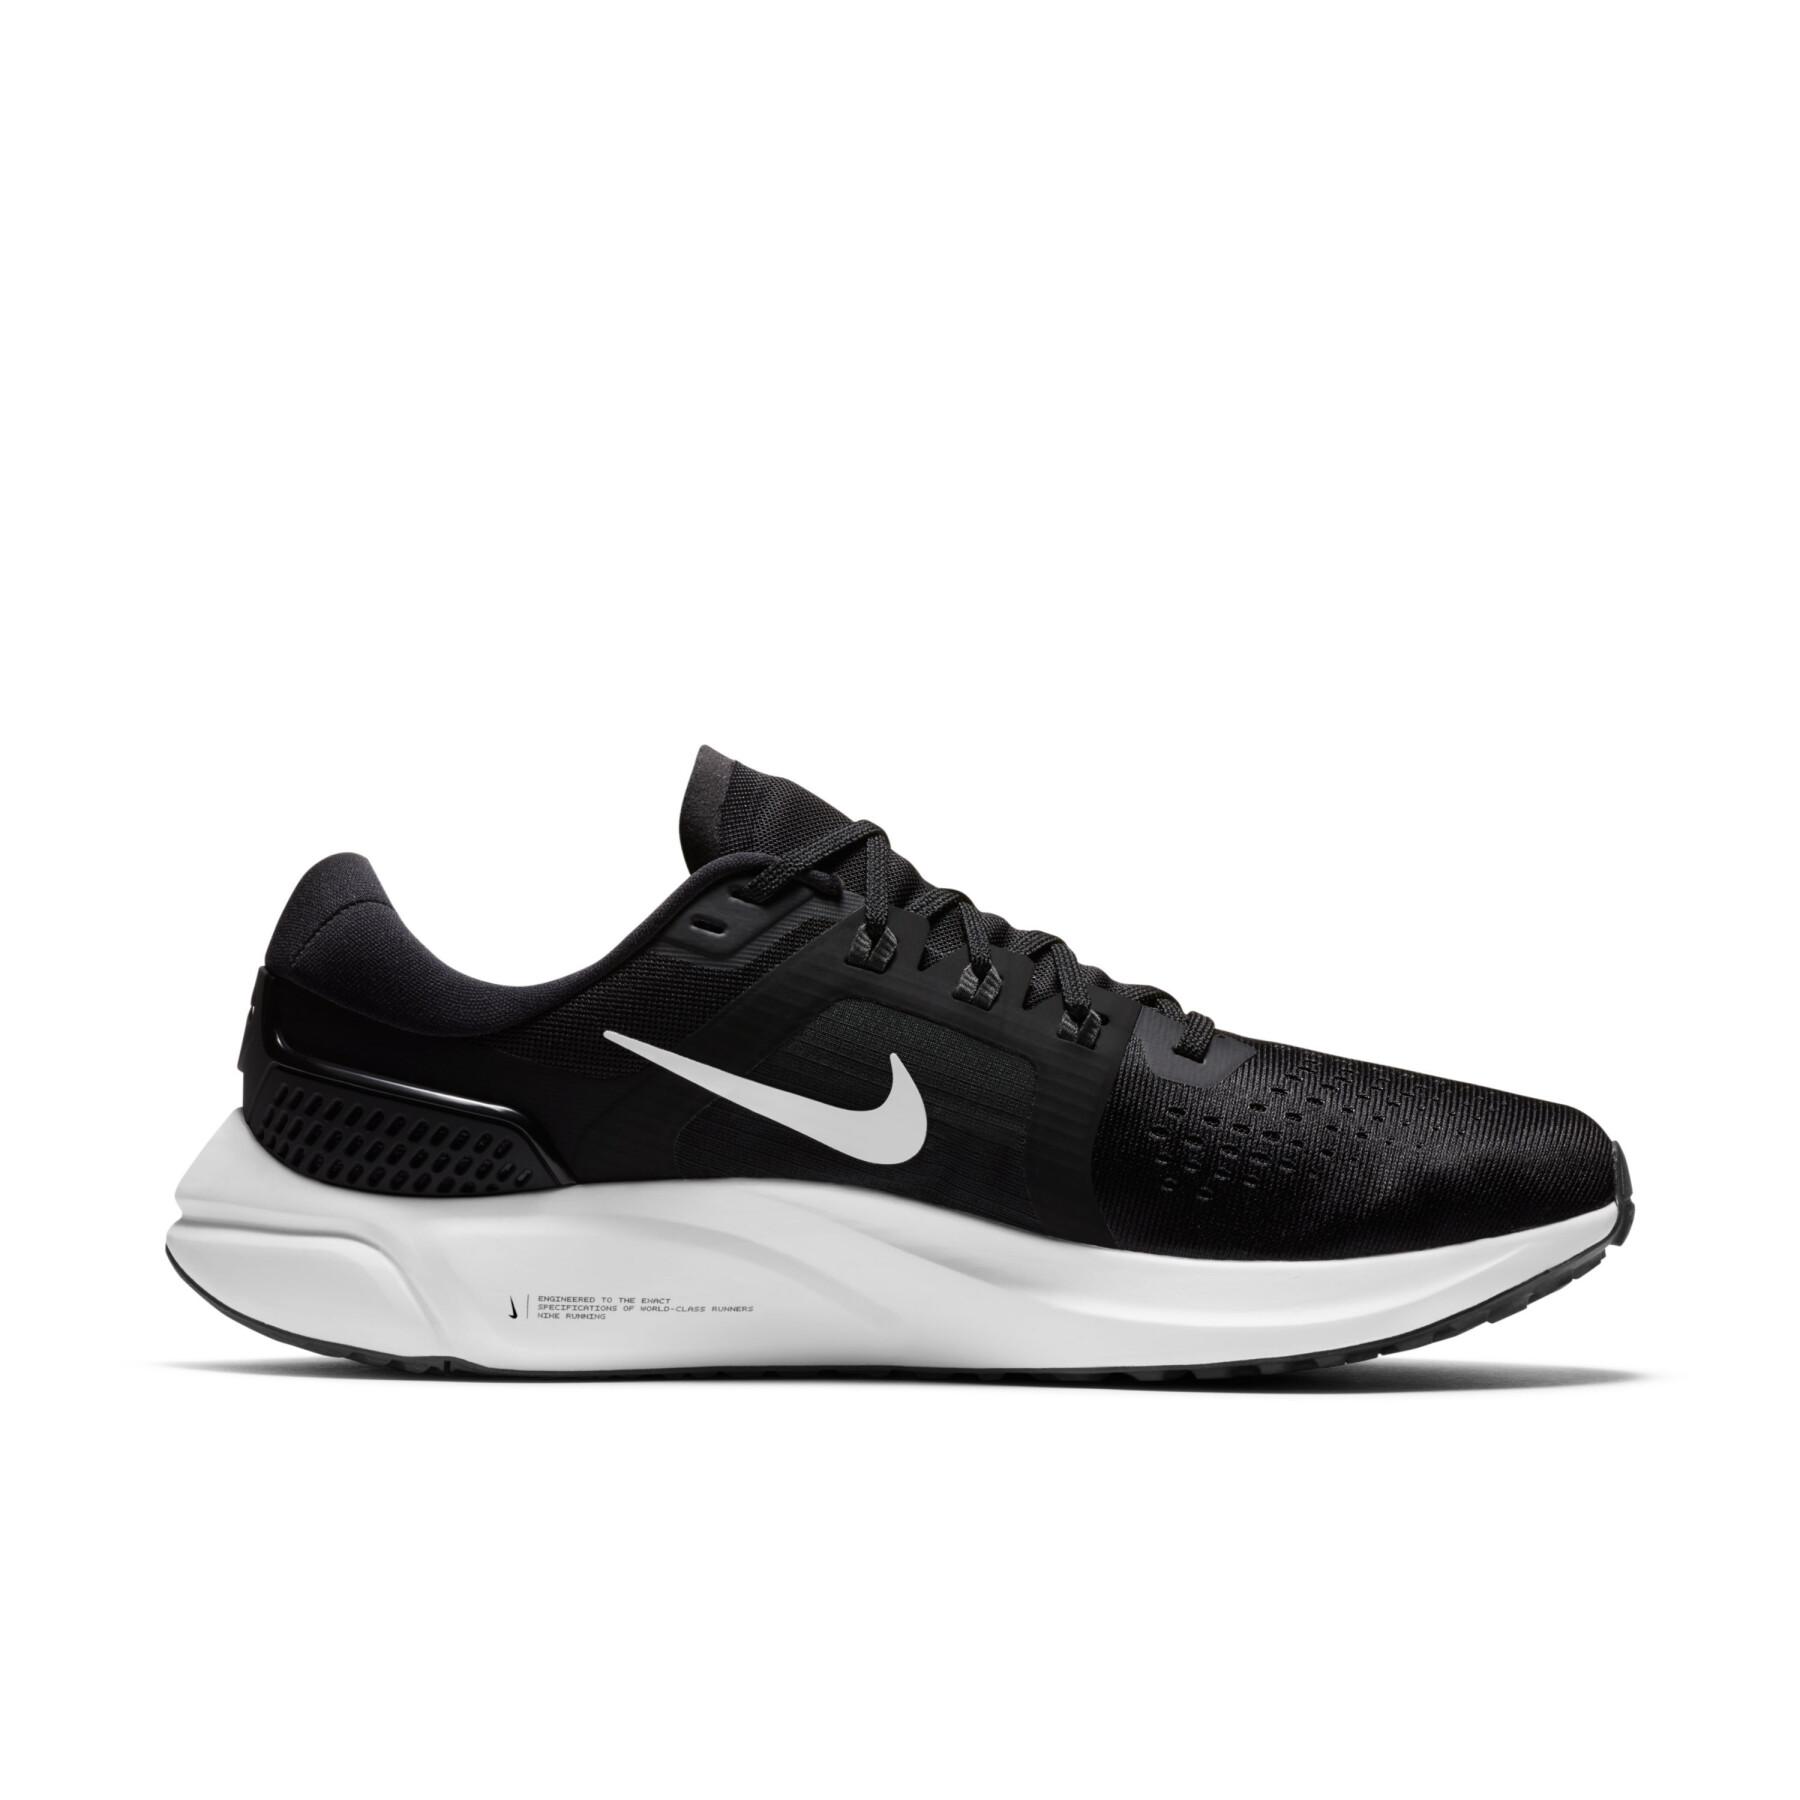 Chaussures de running Nike Air Zoom Vomero 15